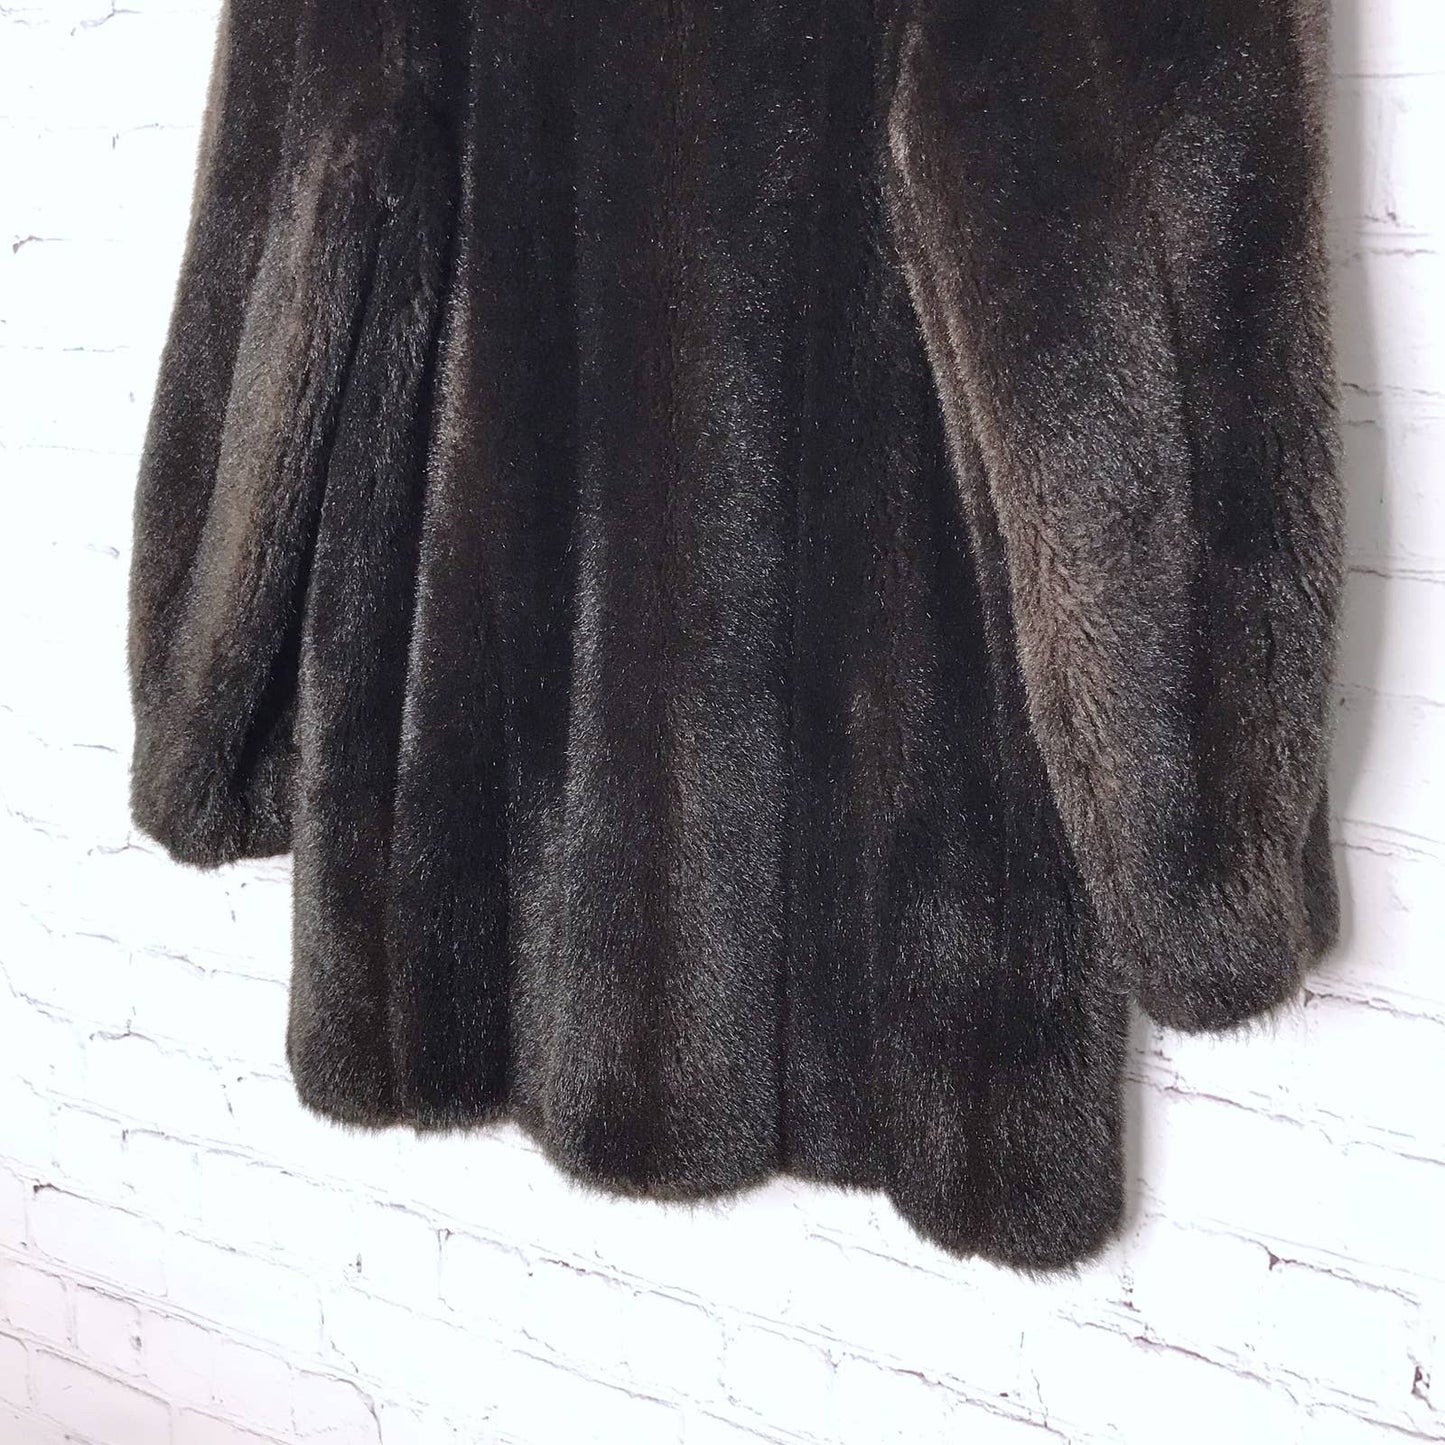 Vintage 80s Dark Brown Faux Fur Coat Made in USA Glam Vegan Size S M